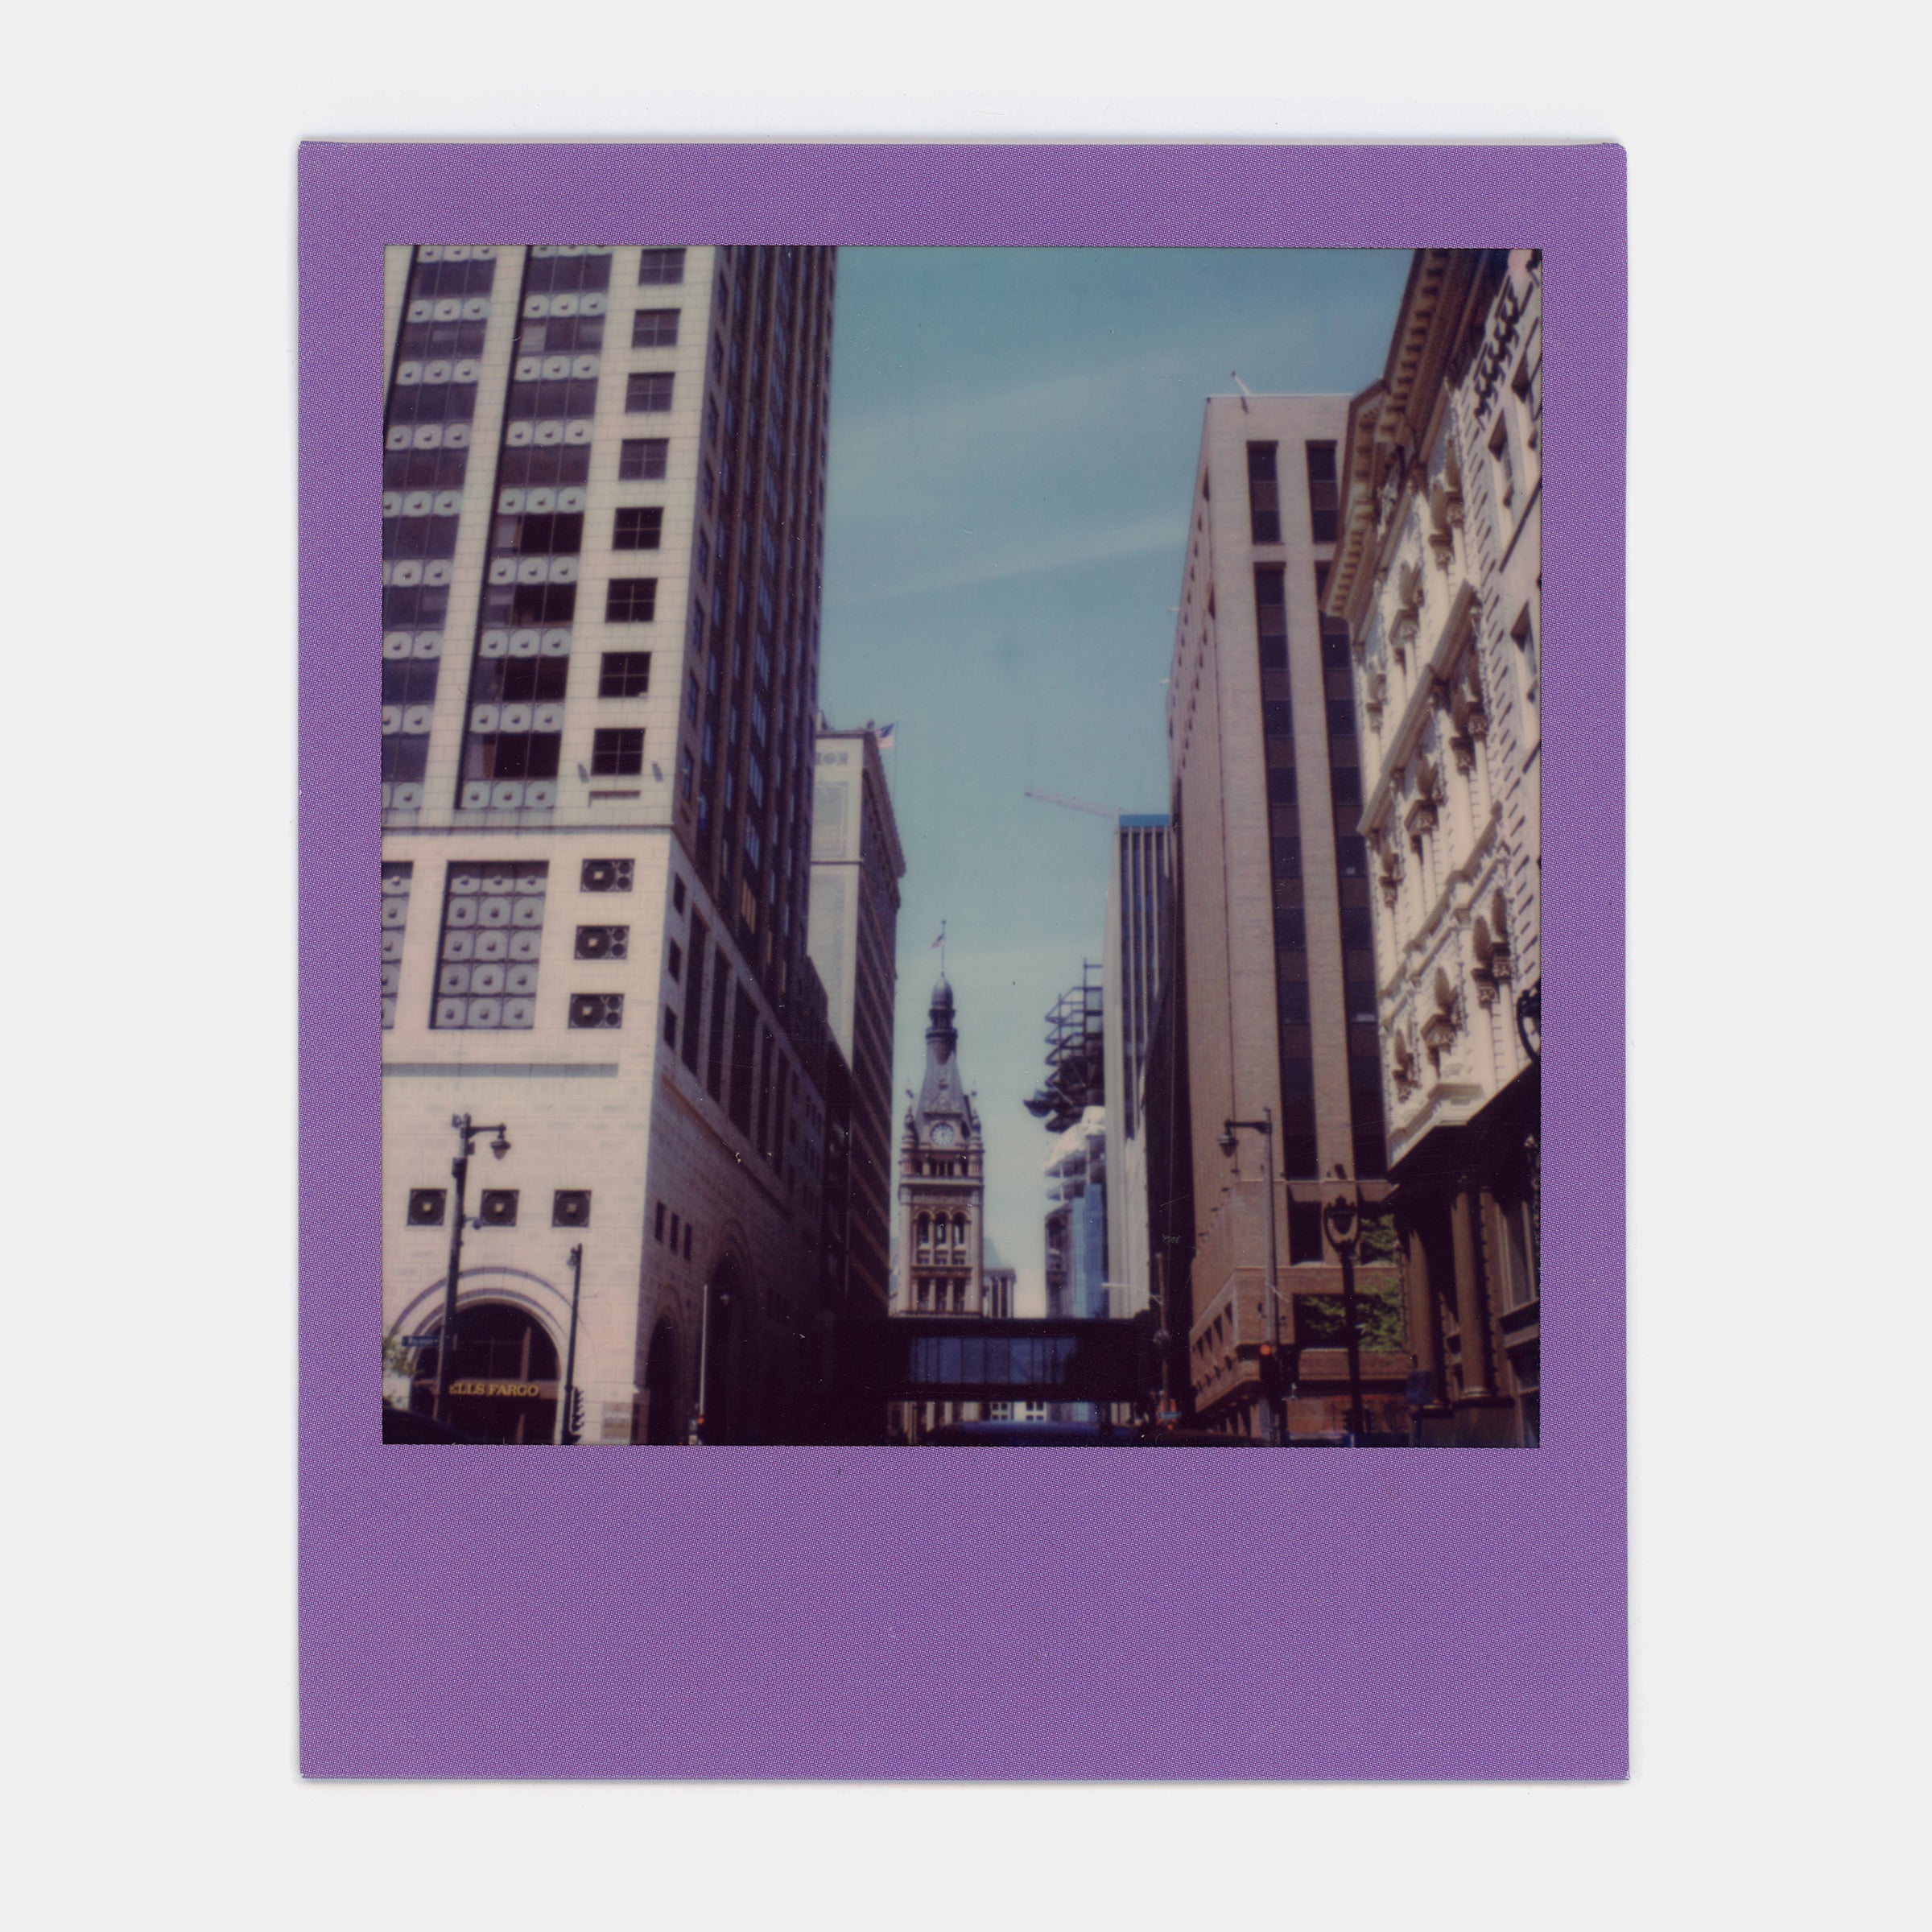 Polaroid Color 600 Instant Film - Color Frames Edition